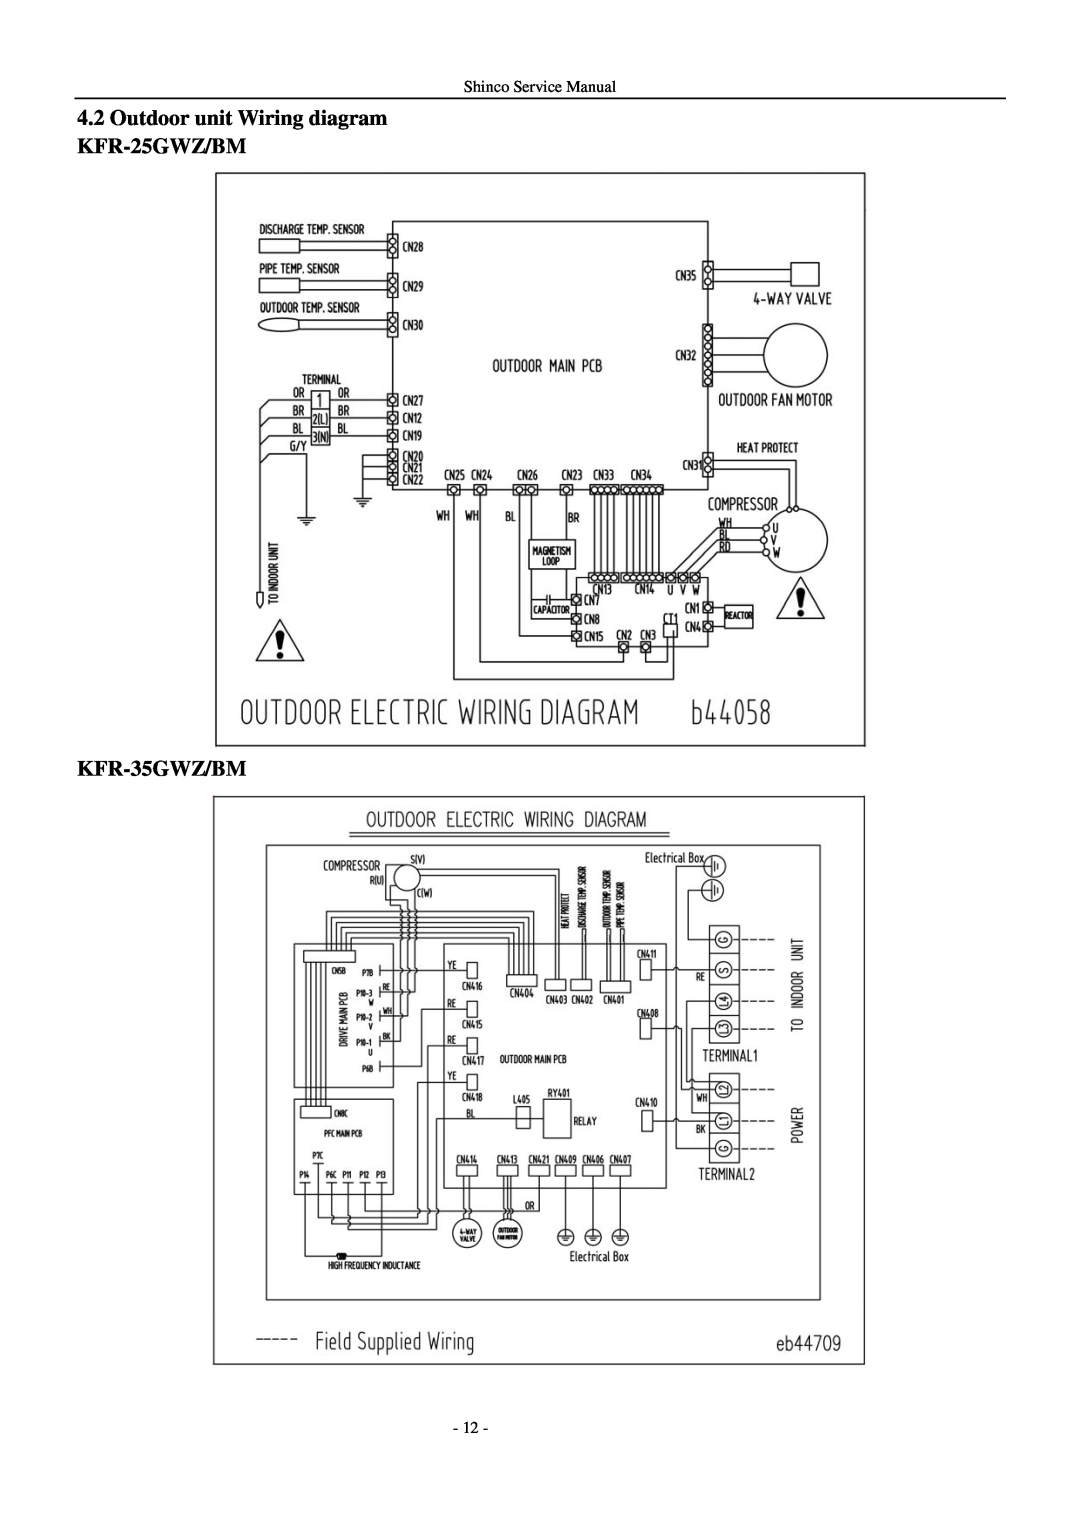 Shinco KFR-25GWZ BM service manual 4.2Outdoor unit Wiring diagram KFR-25GWZ/BM, KFR-35GWZ/BM 